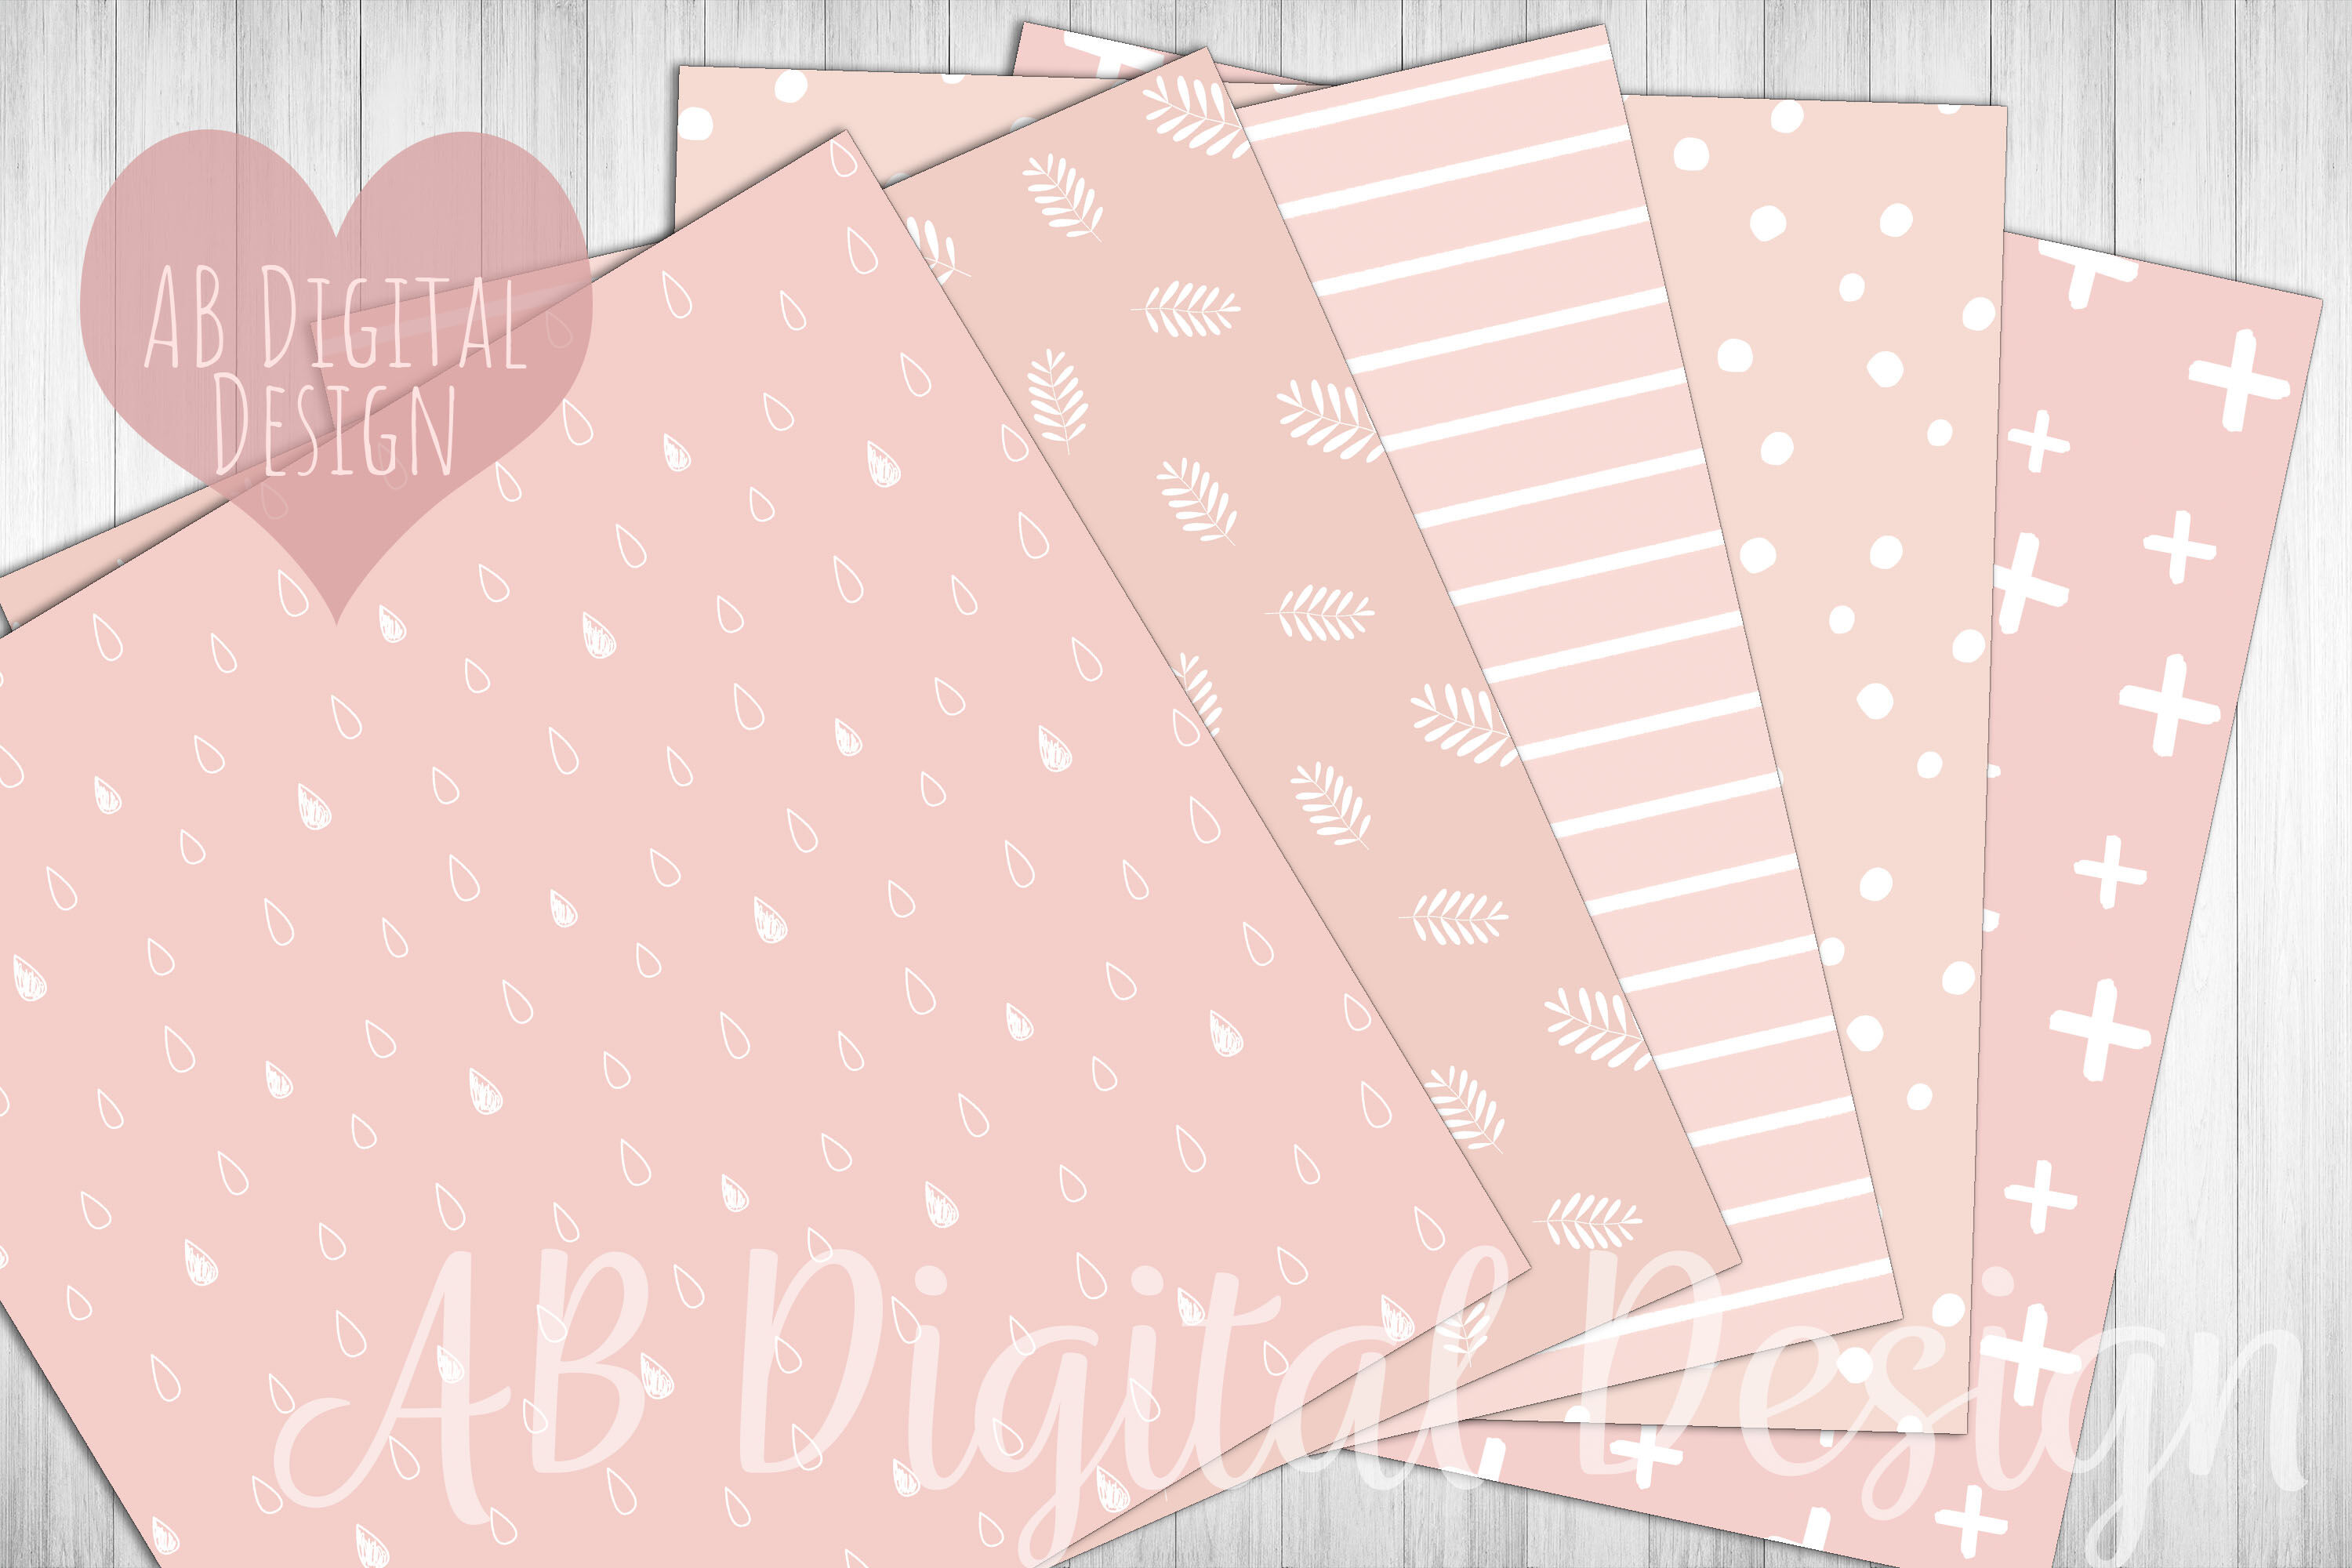 Blush Pink Digital Paper, Baby Shower Scrapbook, Boho, Scandi